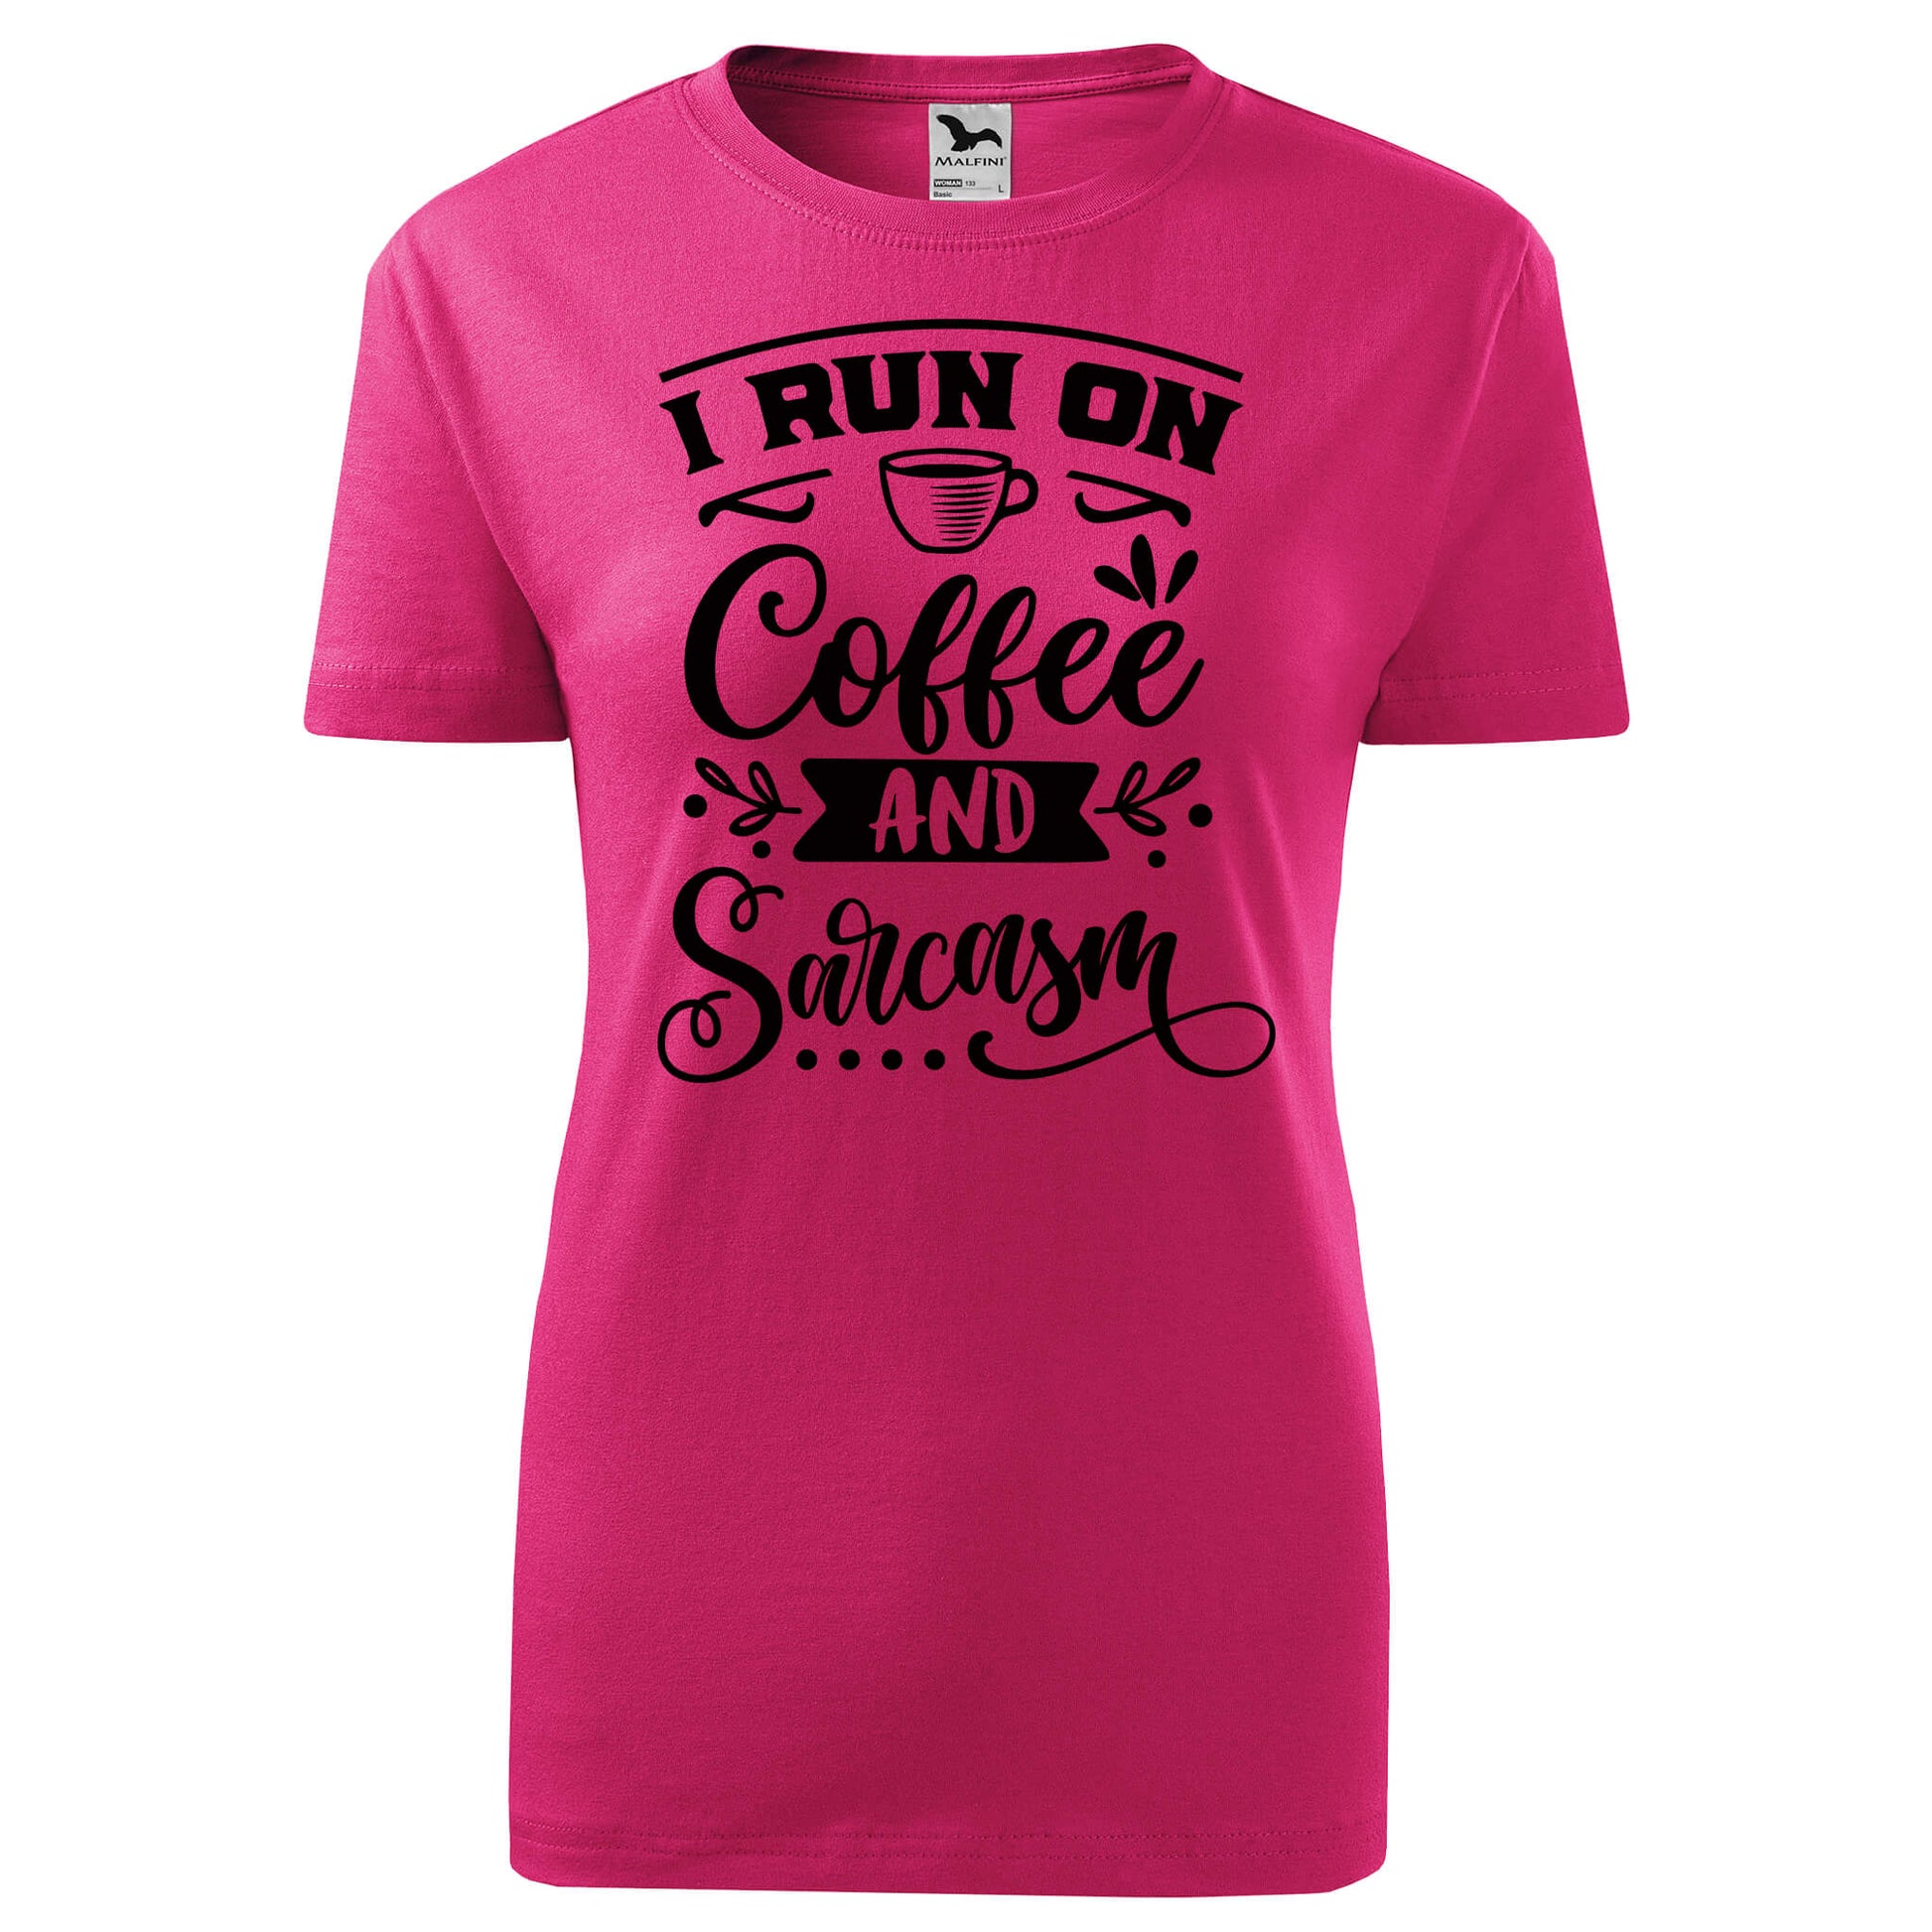 I run on coffee and sarcasm t-shirt - rvdesignprint